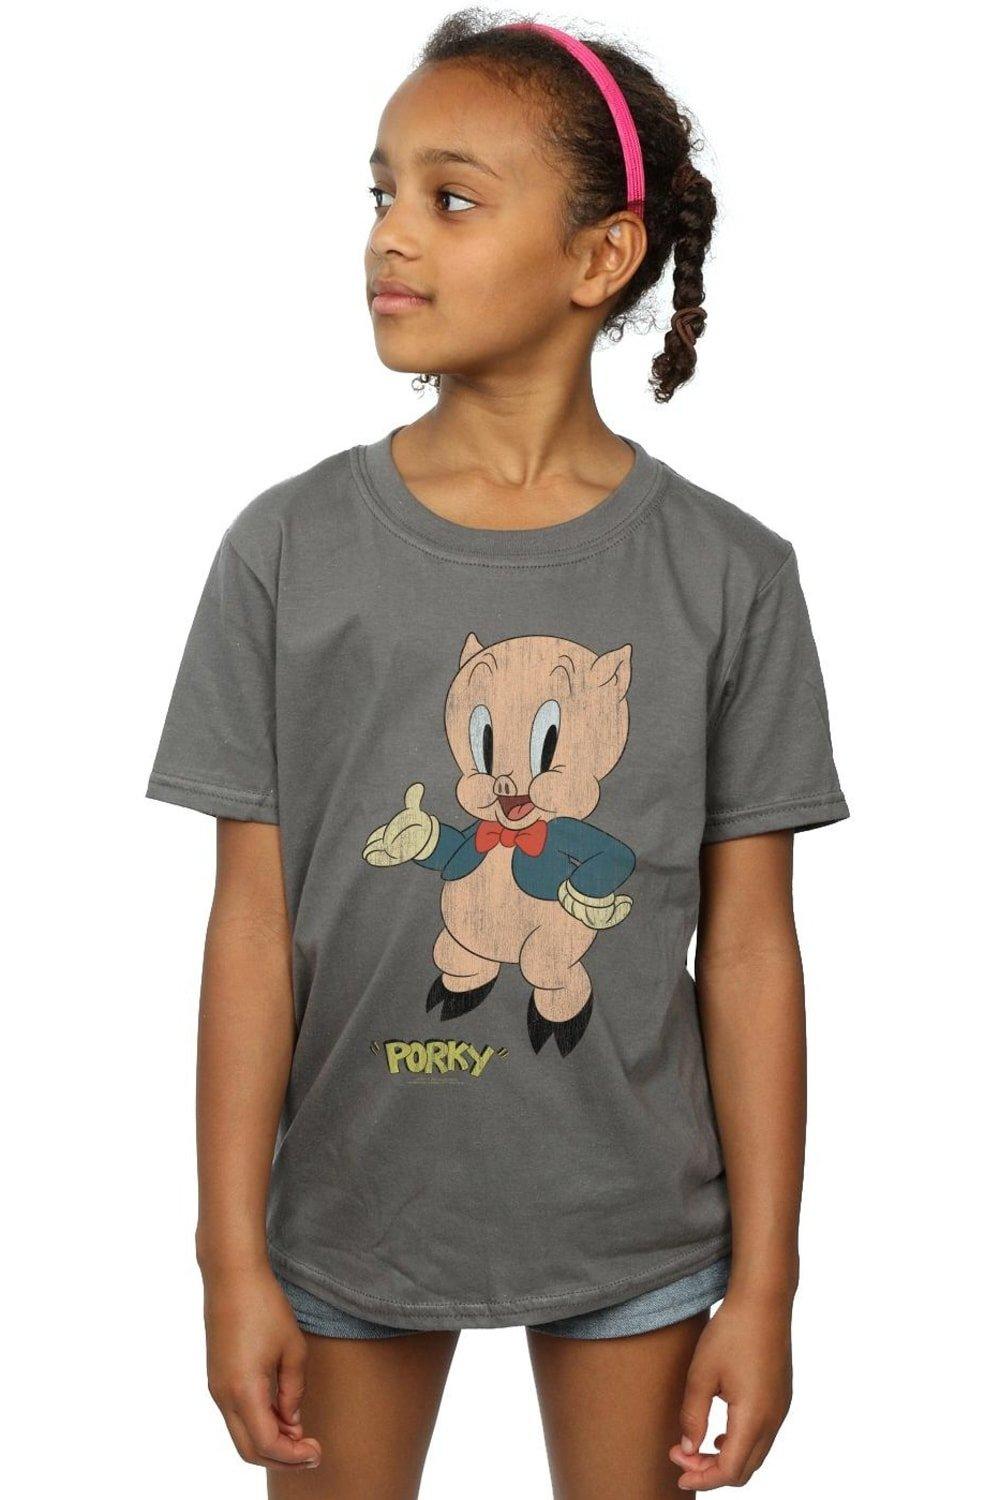 Porky Pig Distressed Cotton T-Shirt